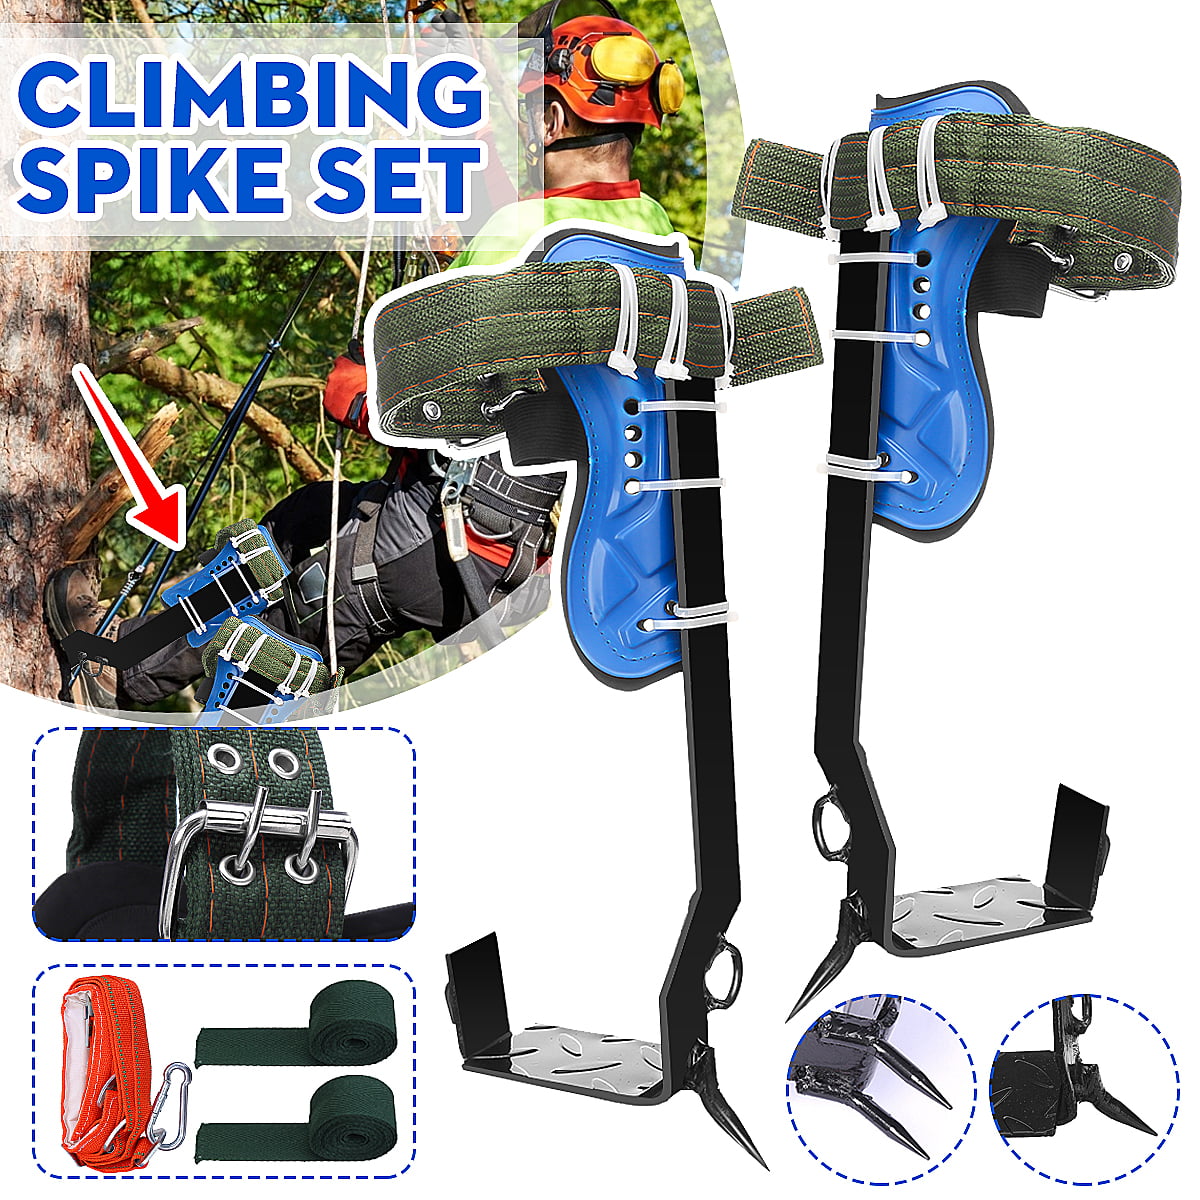 2 Gears Tree Climbing Spike Set Adjustable Safety Belt Lanyard Rope Rescue Belt 